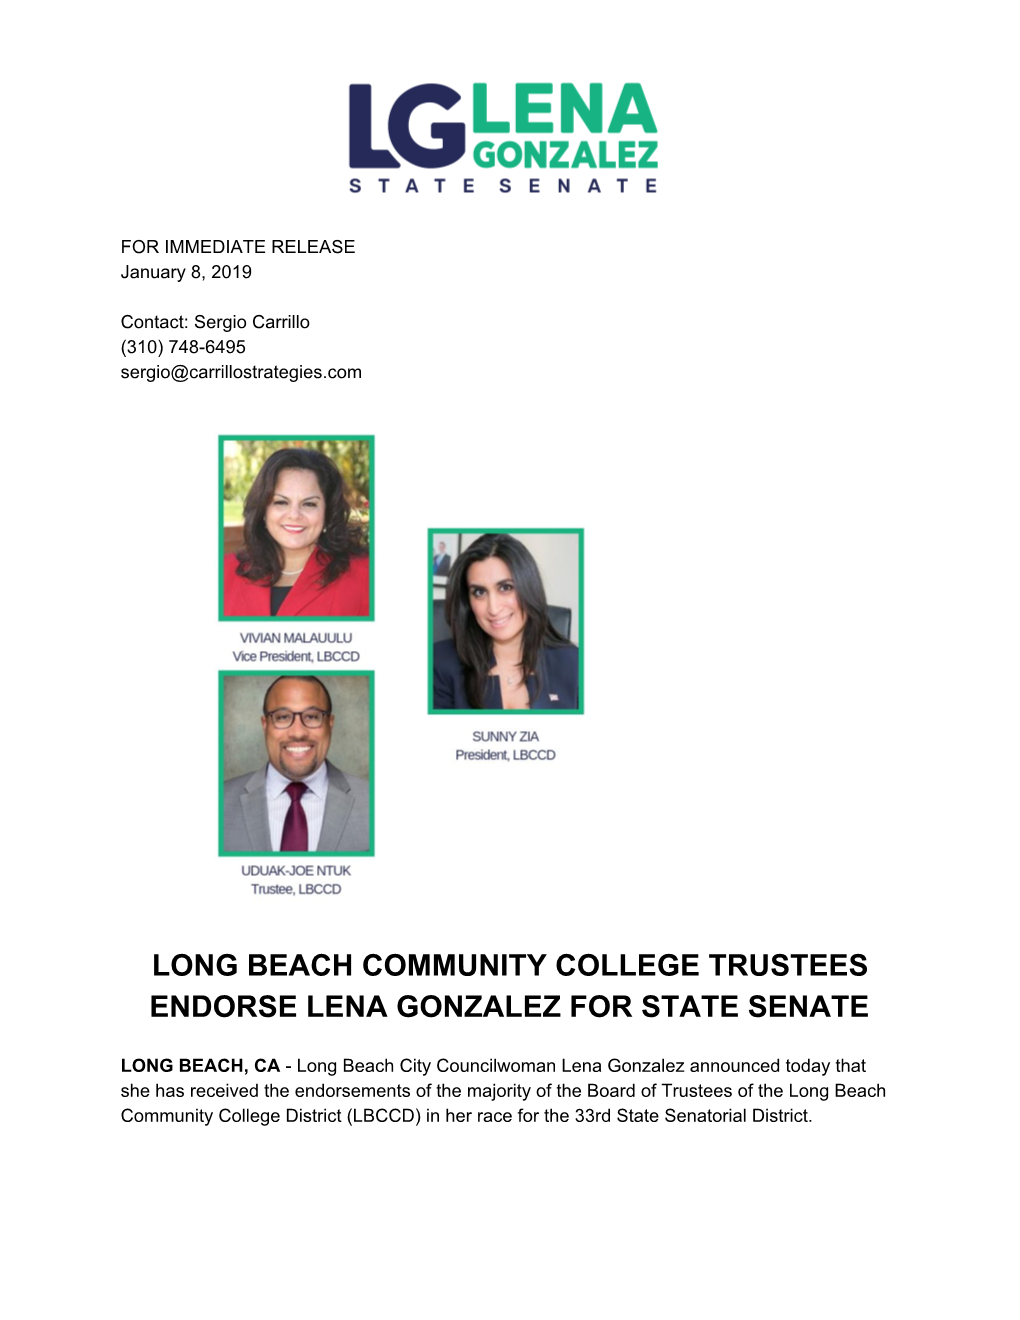 Long Beach Community College Trustees Endorse Lena Gonzalez for State Senate